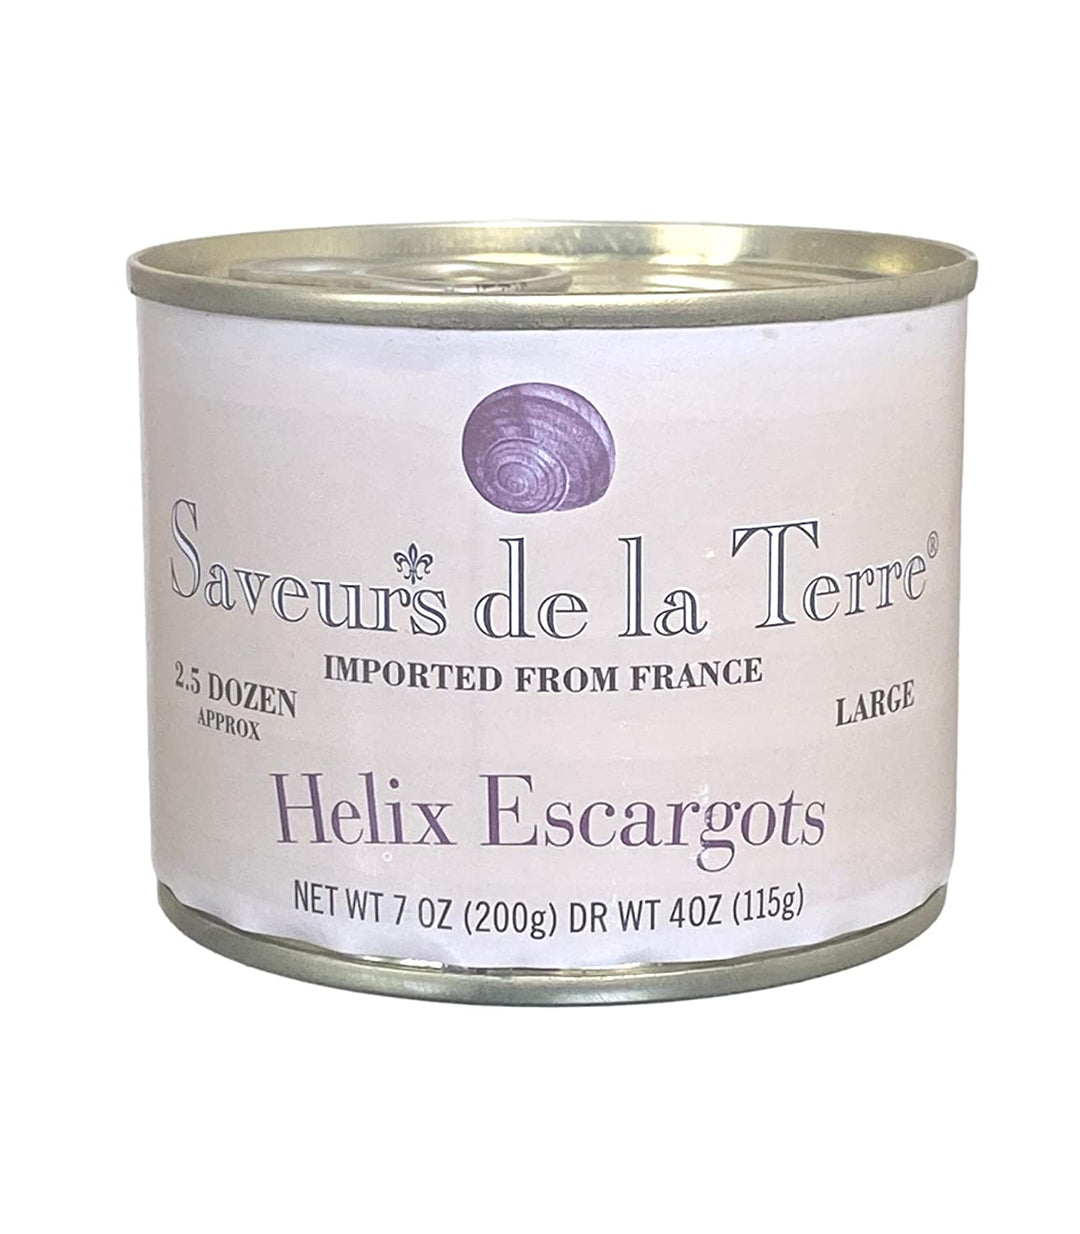 Saveurs - Helix Escargots, 1.5 Dozen Large, 7oz